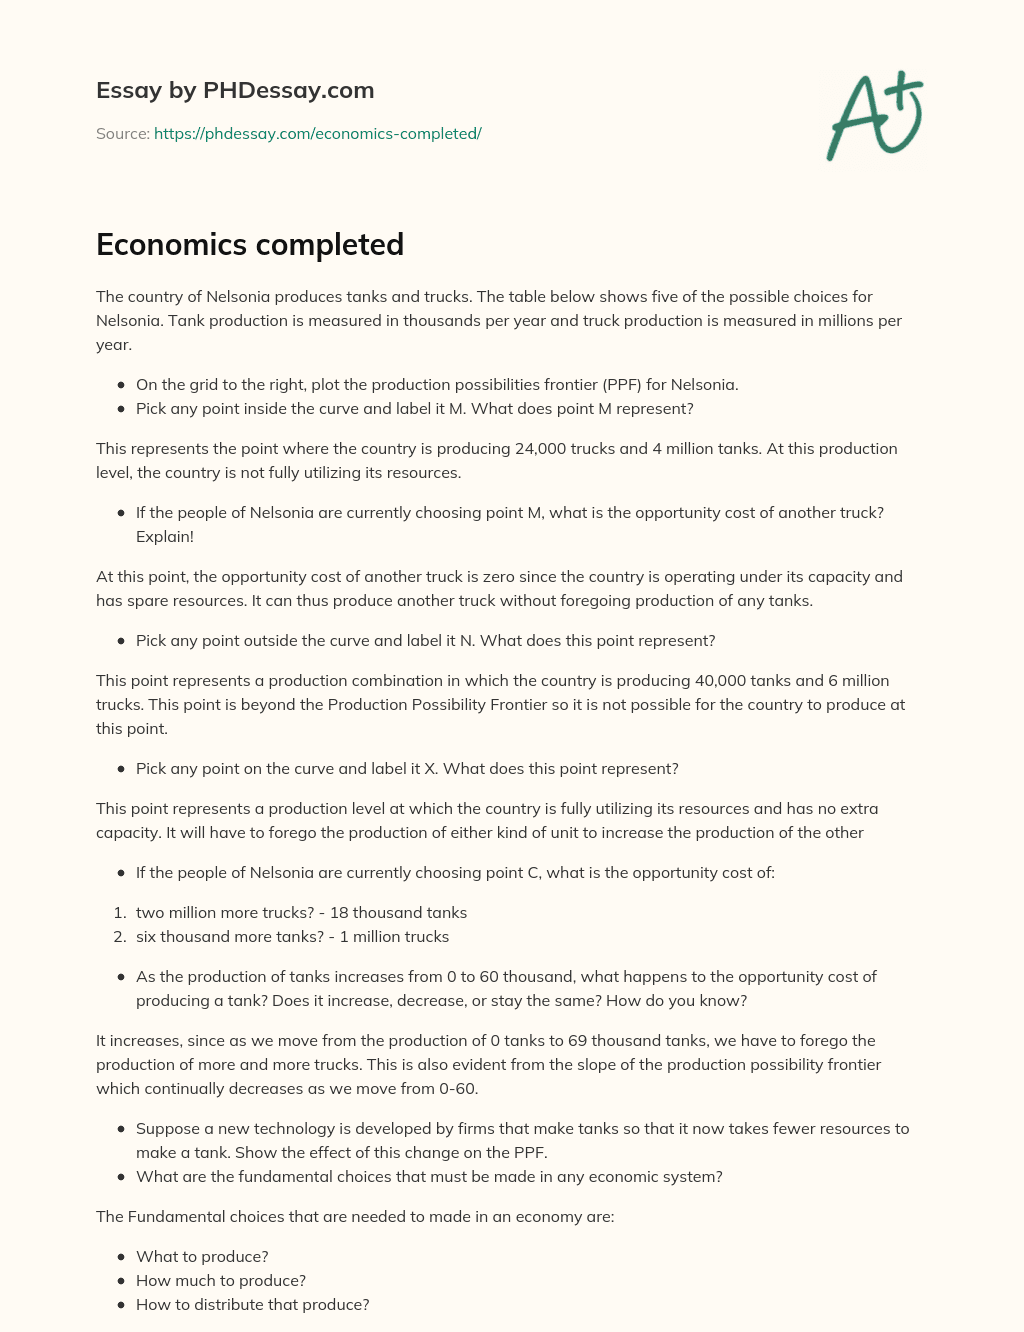 Economics completed essay